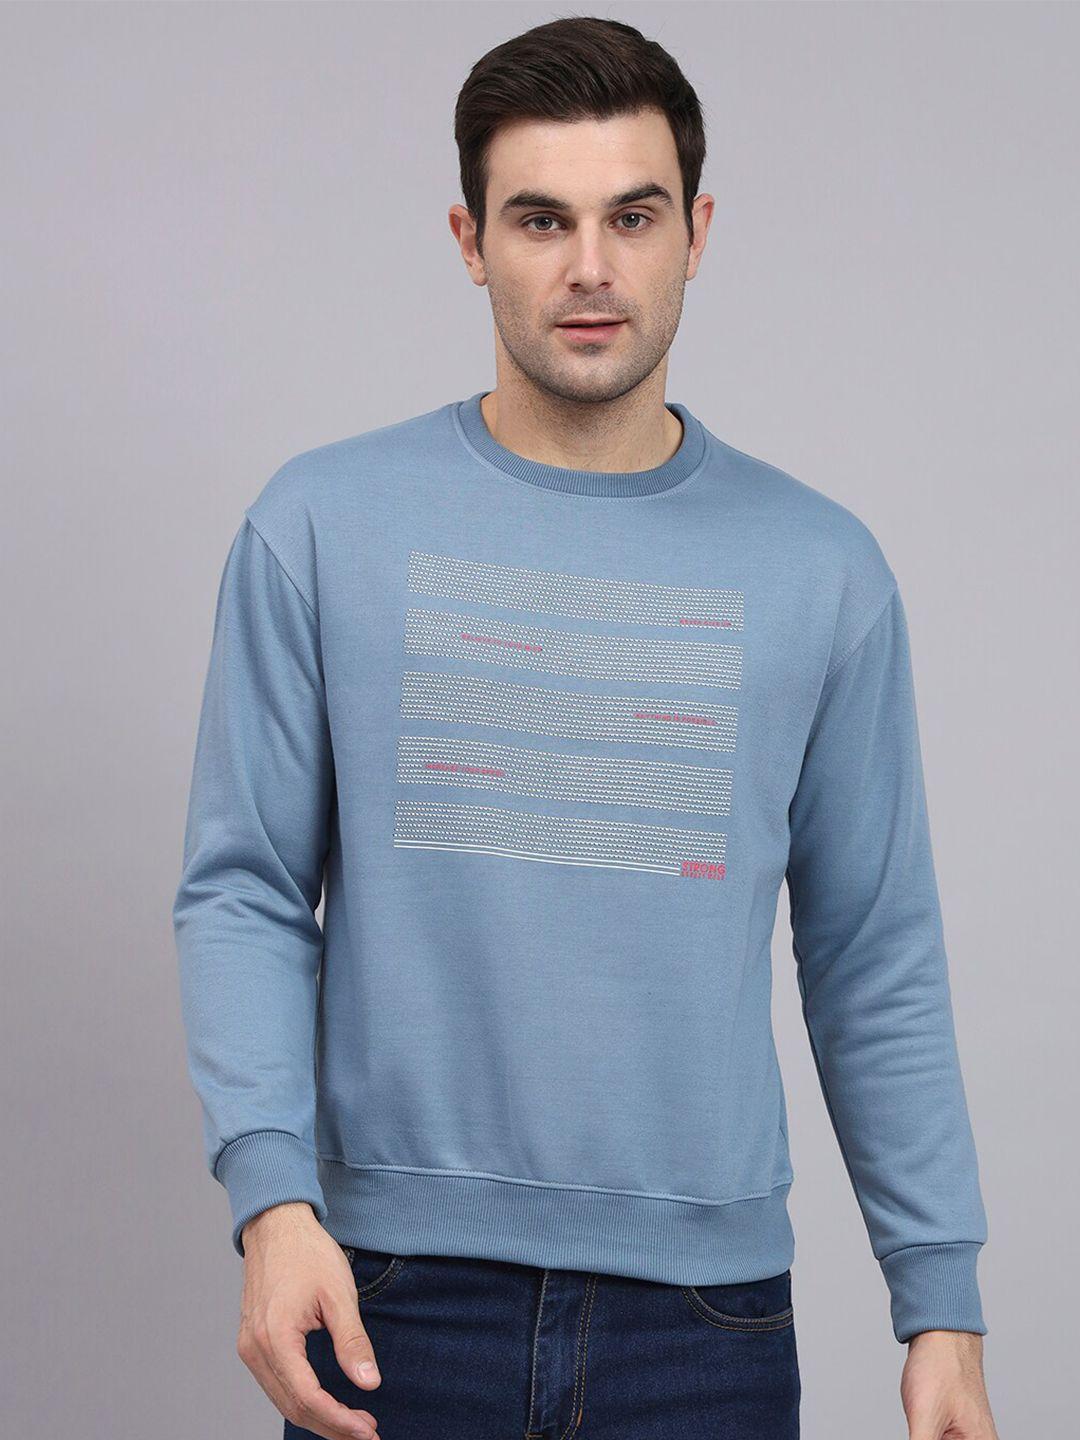 obaan graphic printed cotton pullover sweatshirt